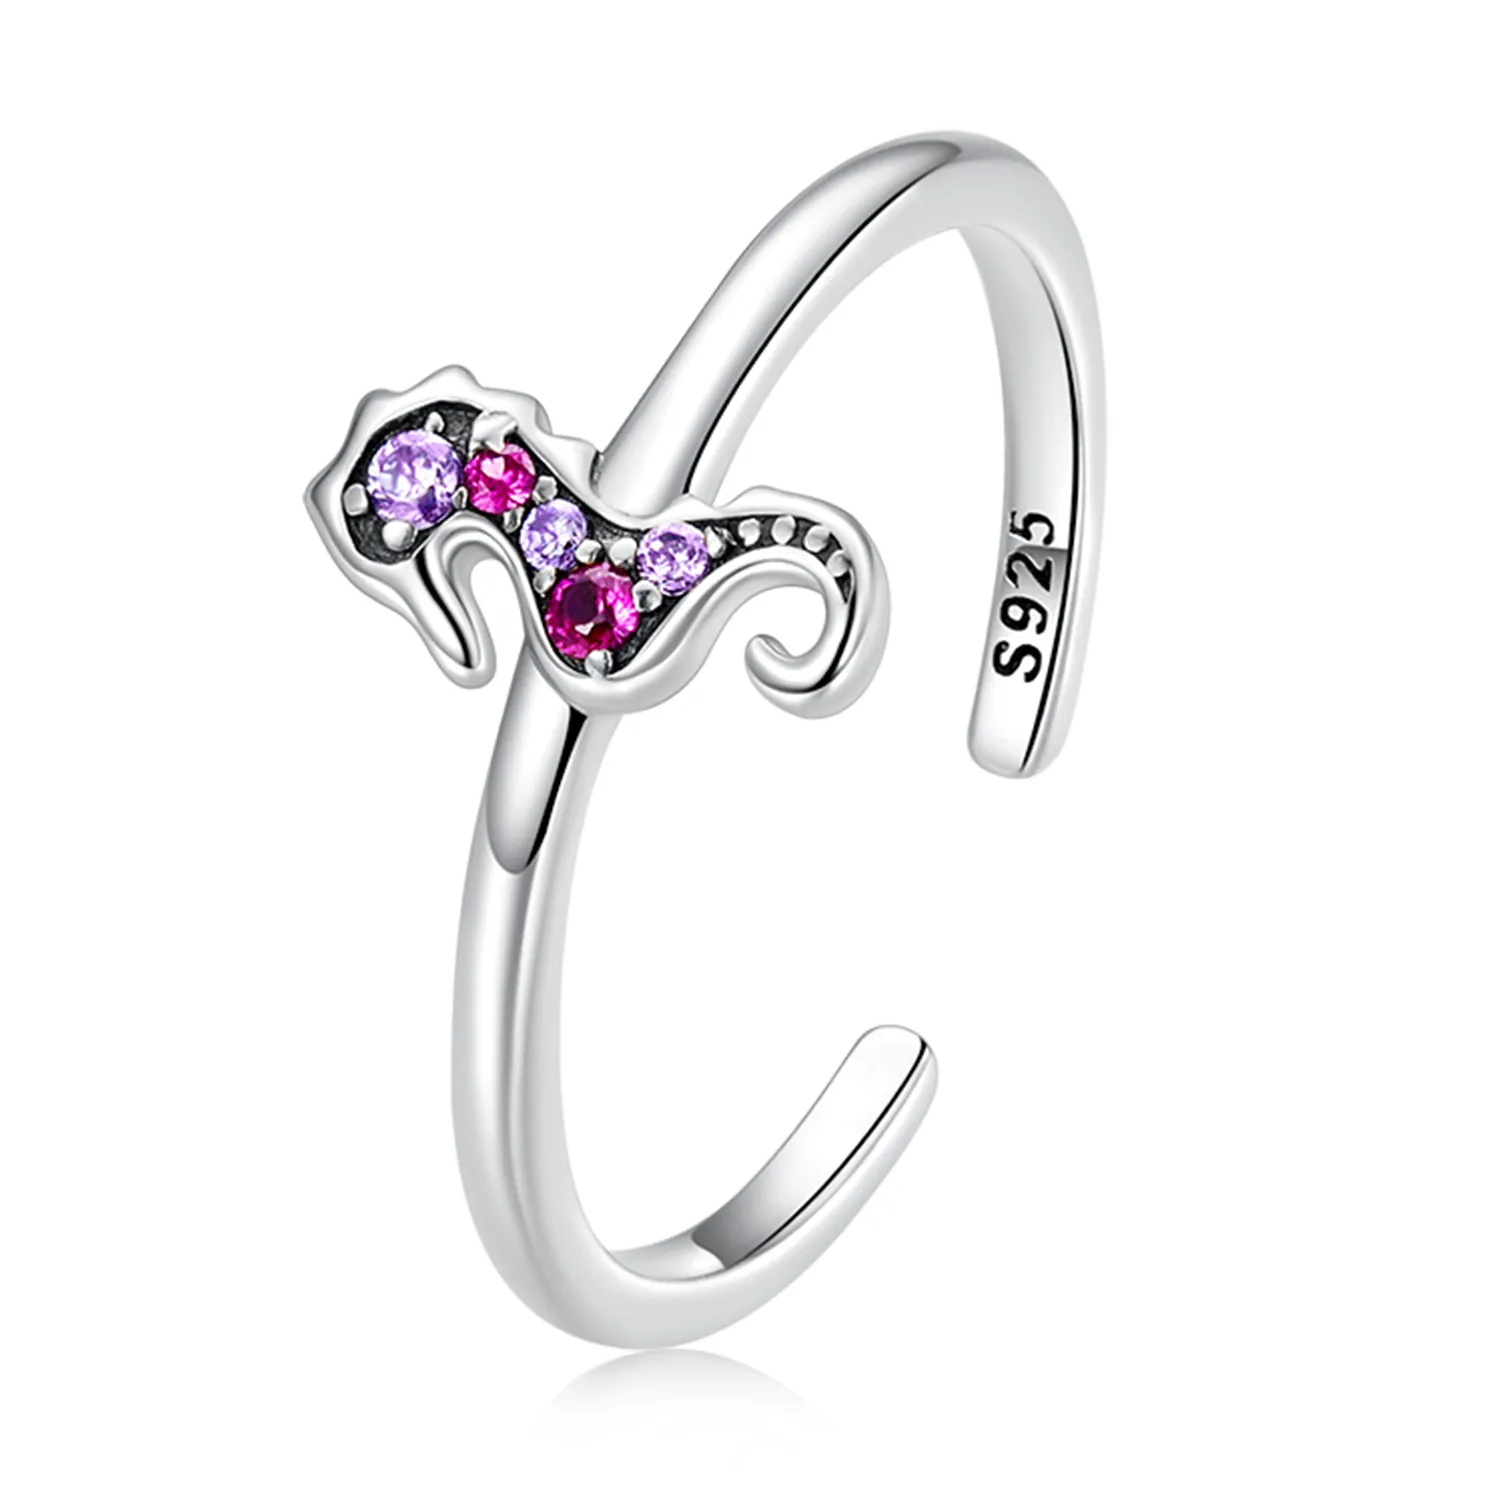 Pandora Style Exquisite Seahorse Open Ring - SCR816